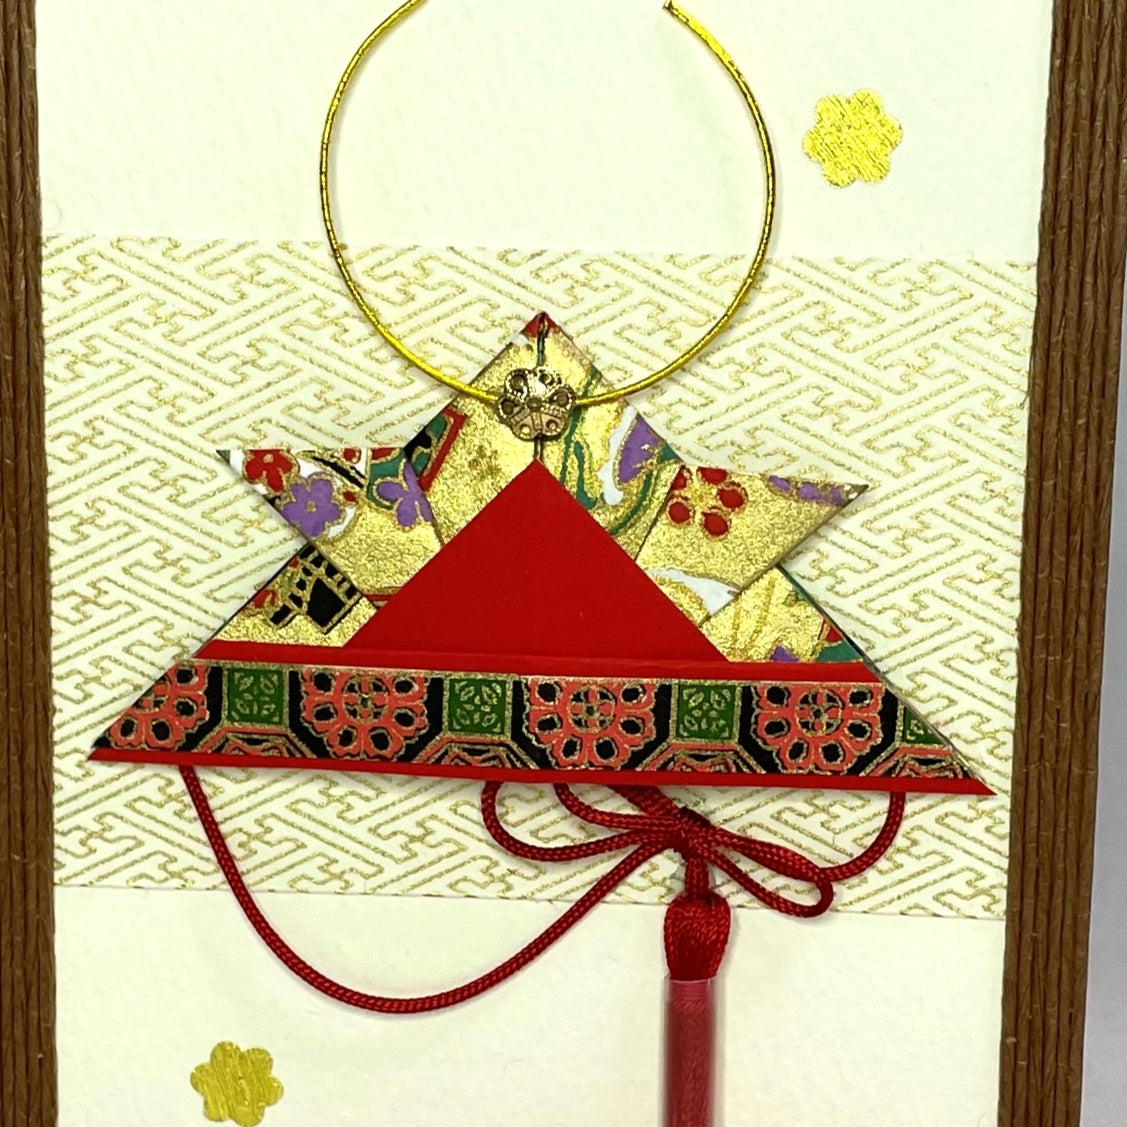 Handmade Greeting Card "Traditional Helmet / Red"